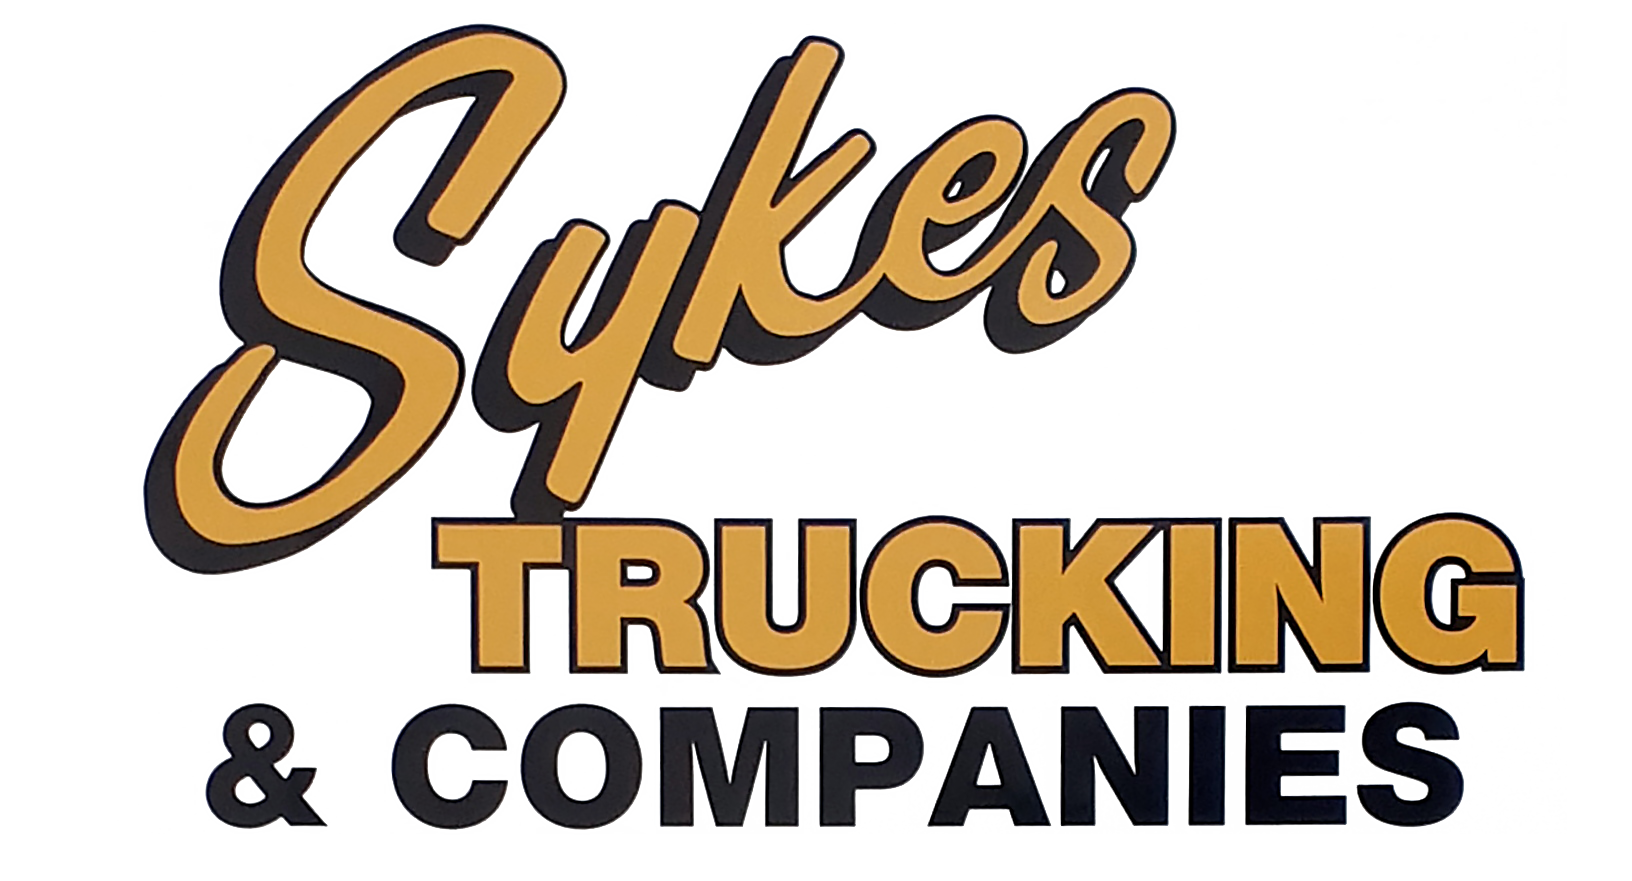 Sykes Trucking & Companies